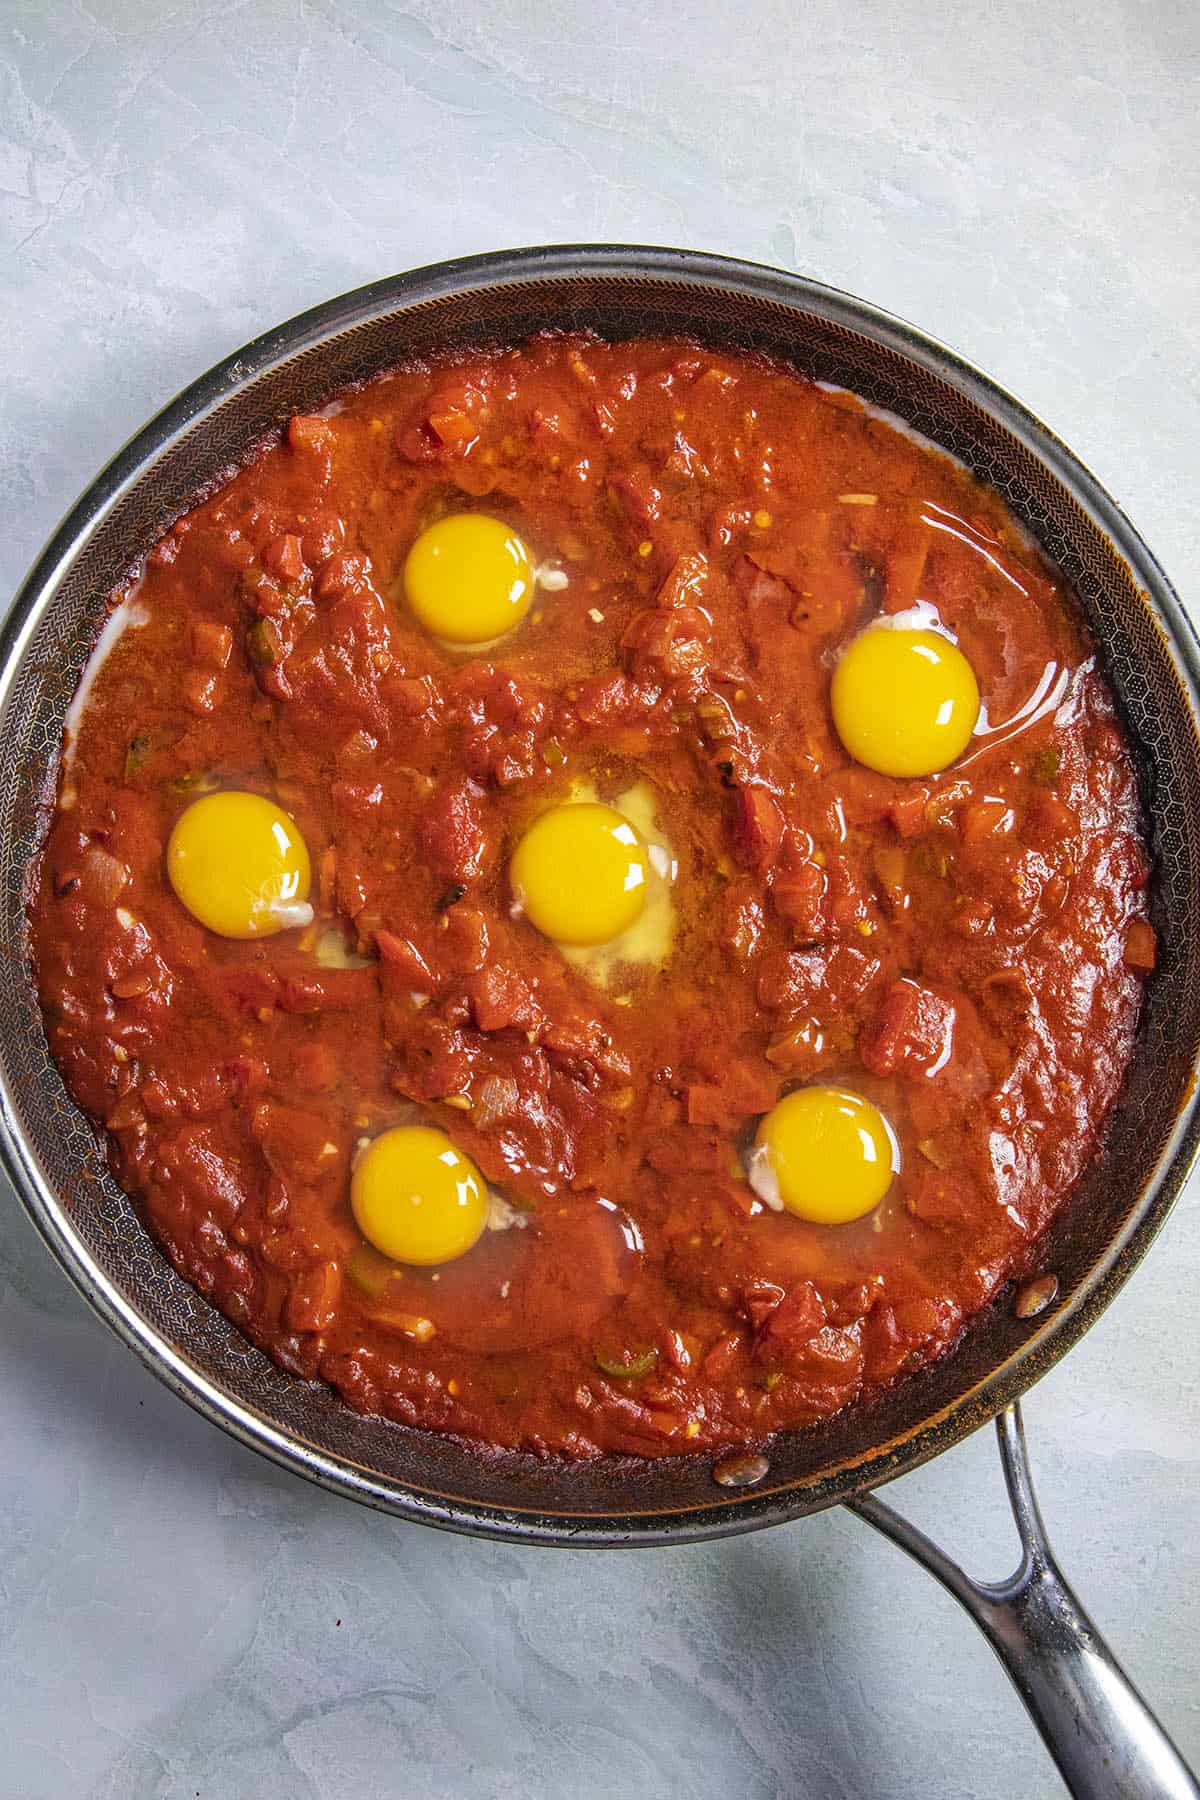 6 eggs cracked into spicy tomato sauce to make Shakshuka